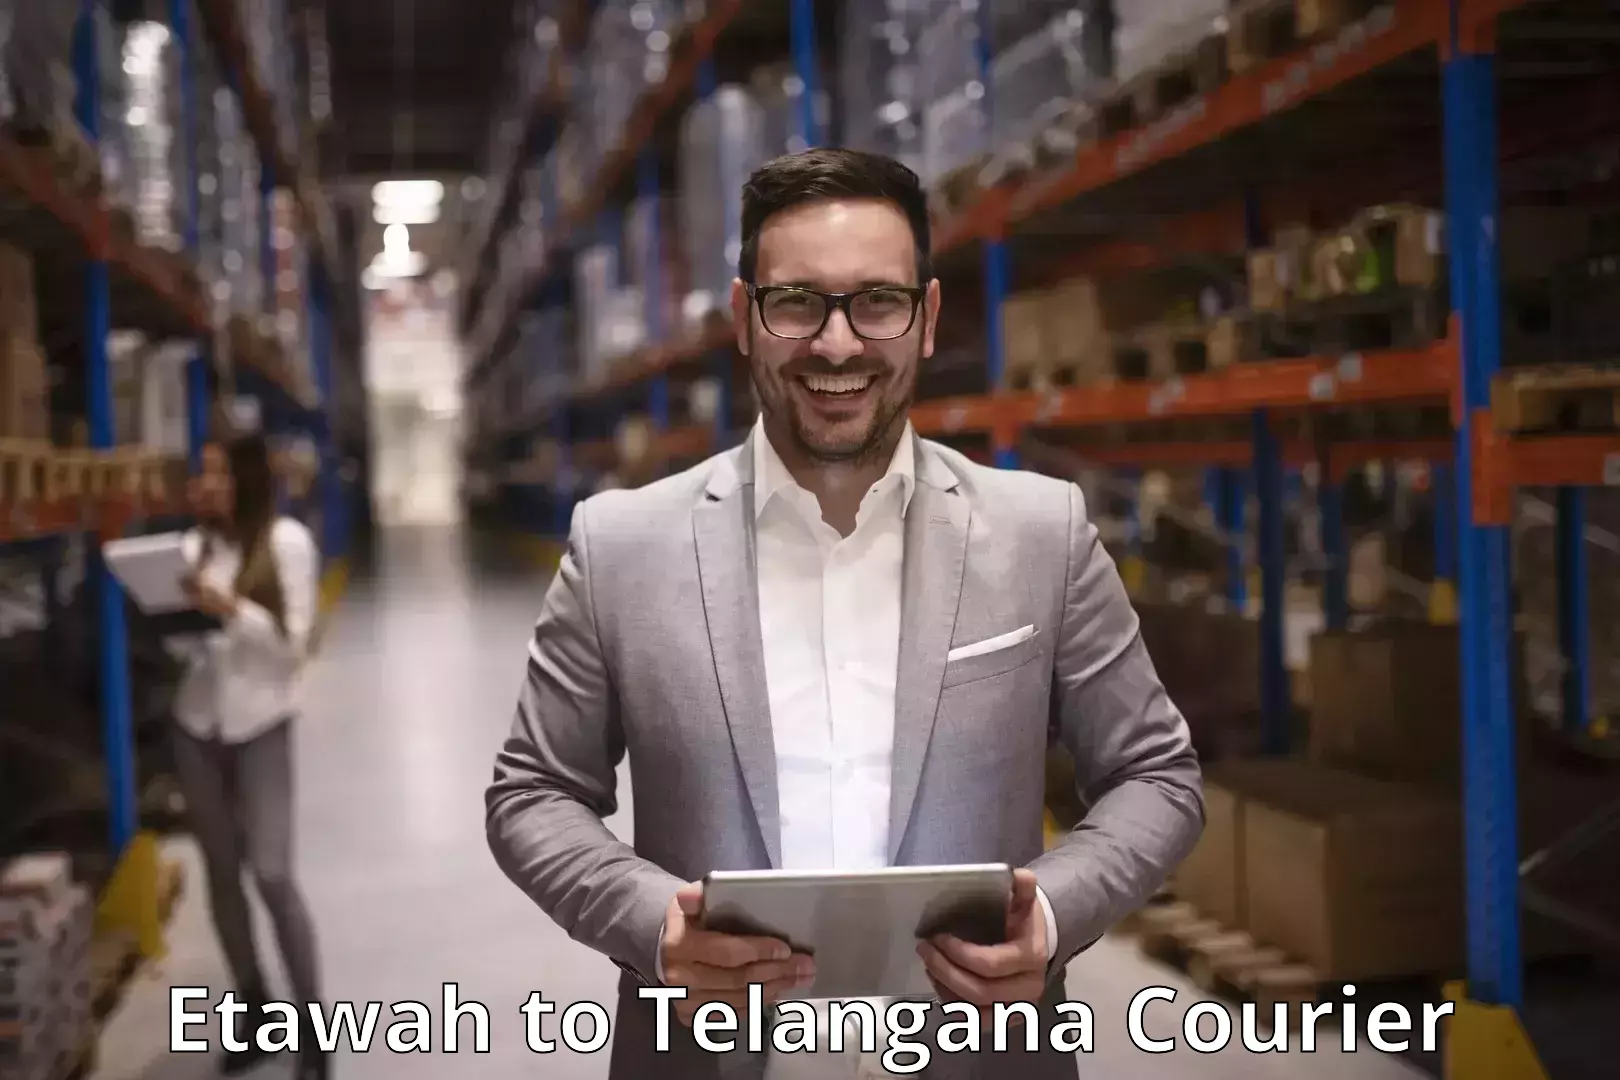 Courier service comparison Etawah to Madhavaram